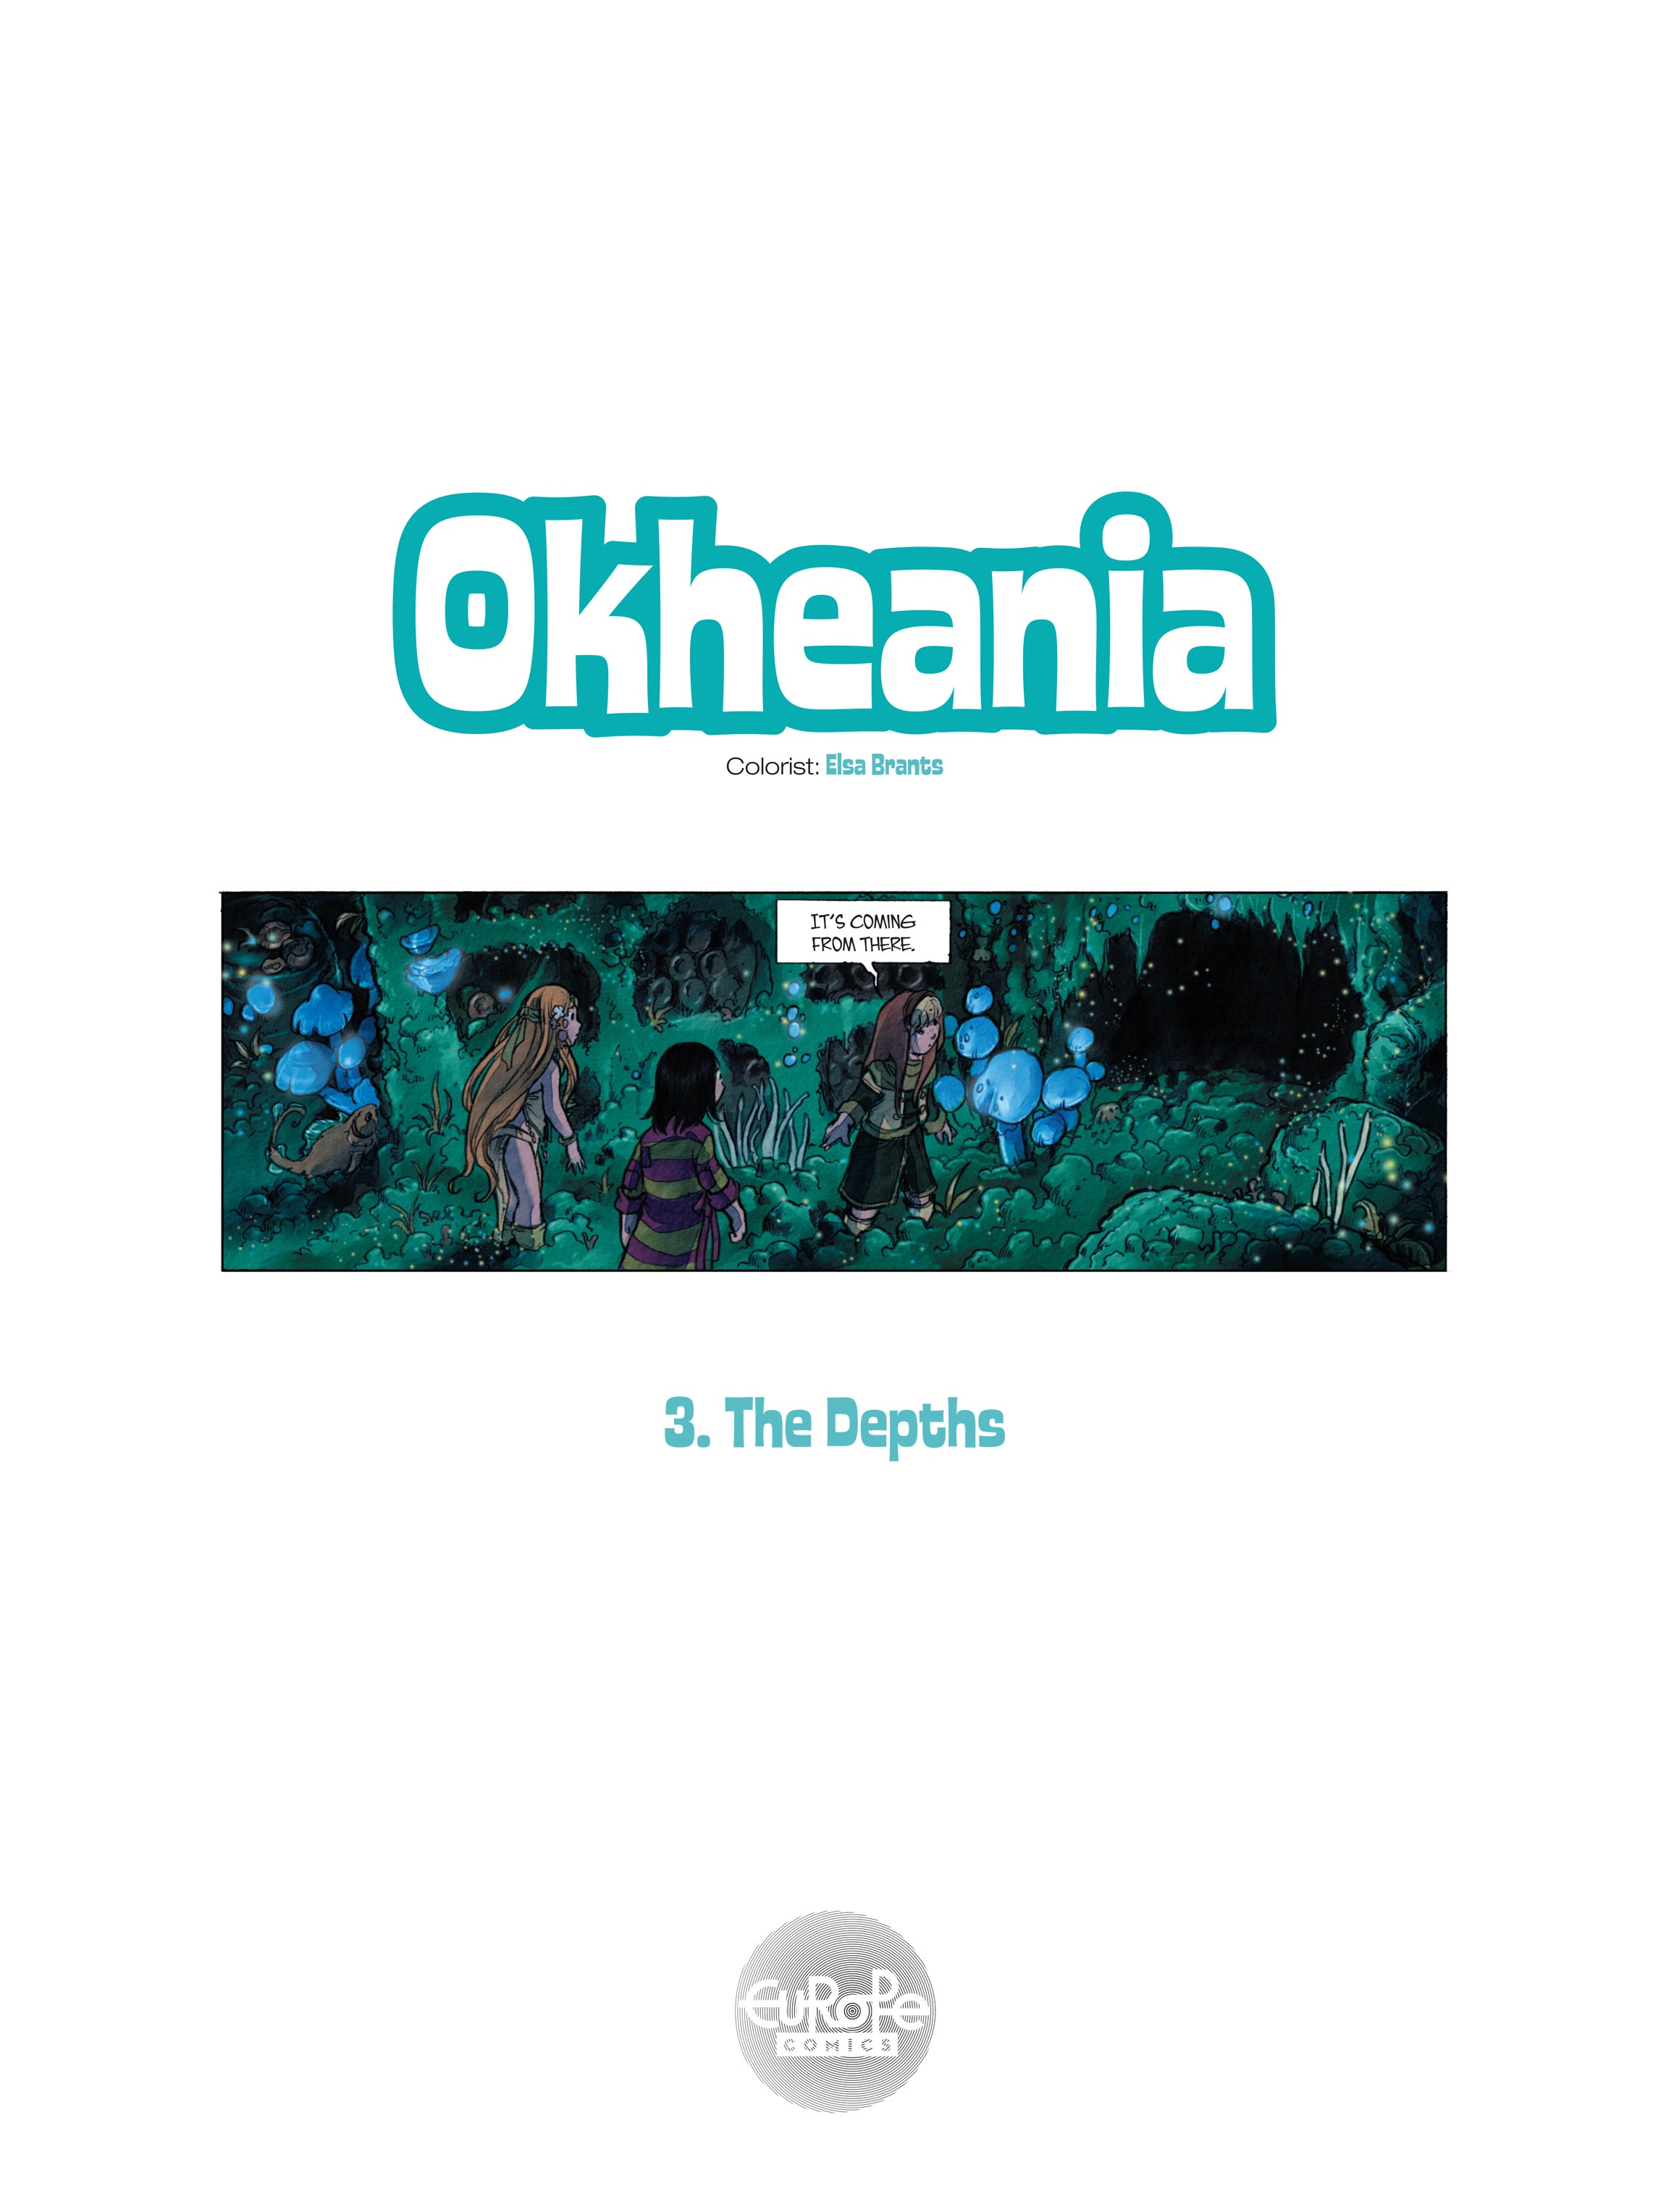 Read online Okheania comic -  Issue #3 - 2